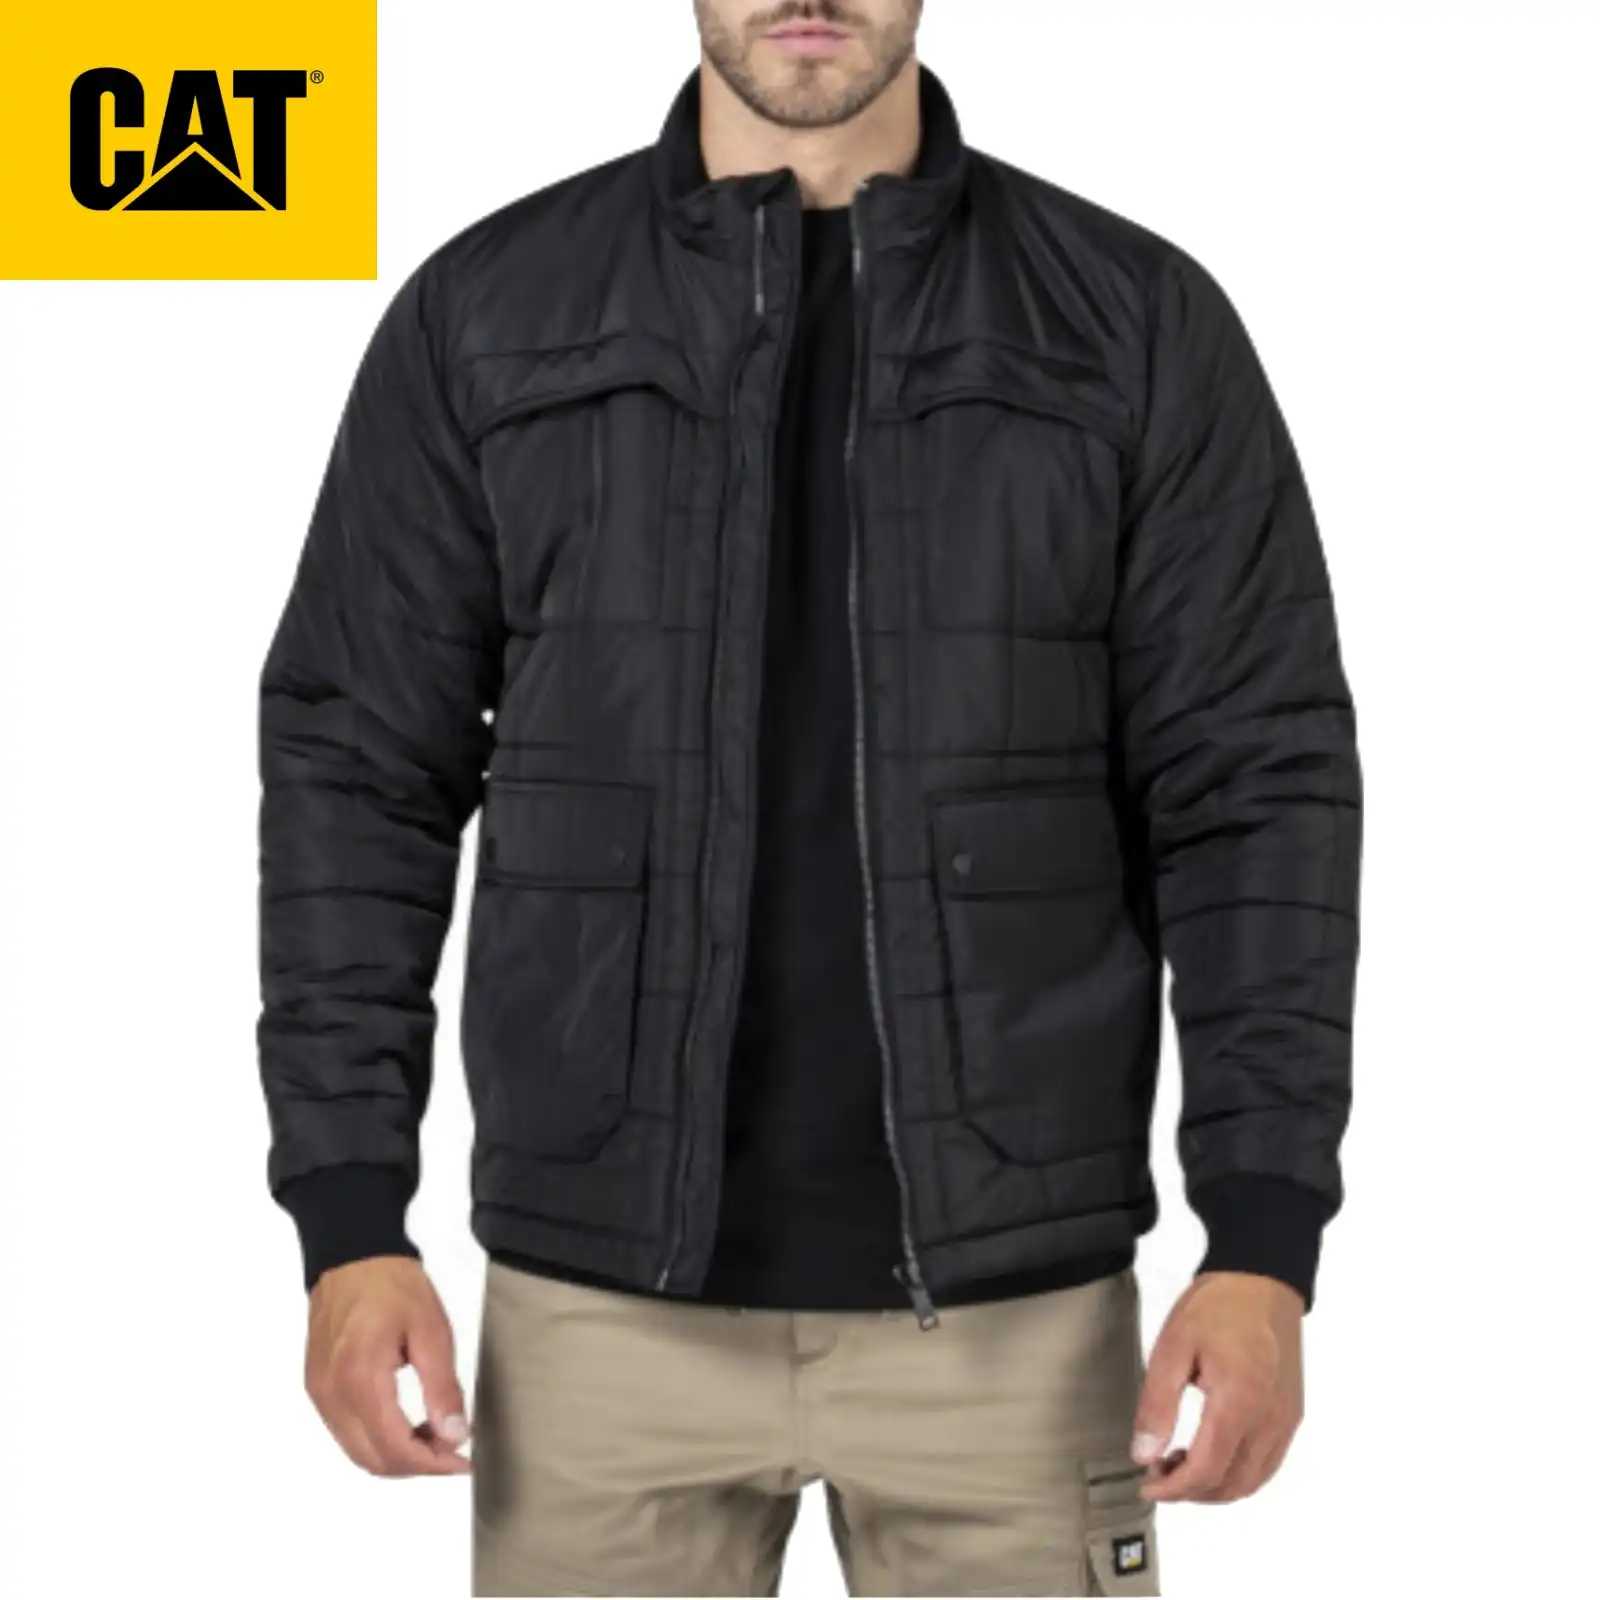 CAT Men's Terrain Winter Warm Jacket Caterpillar - Black